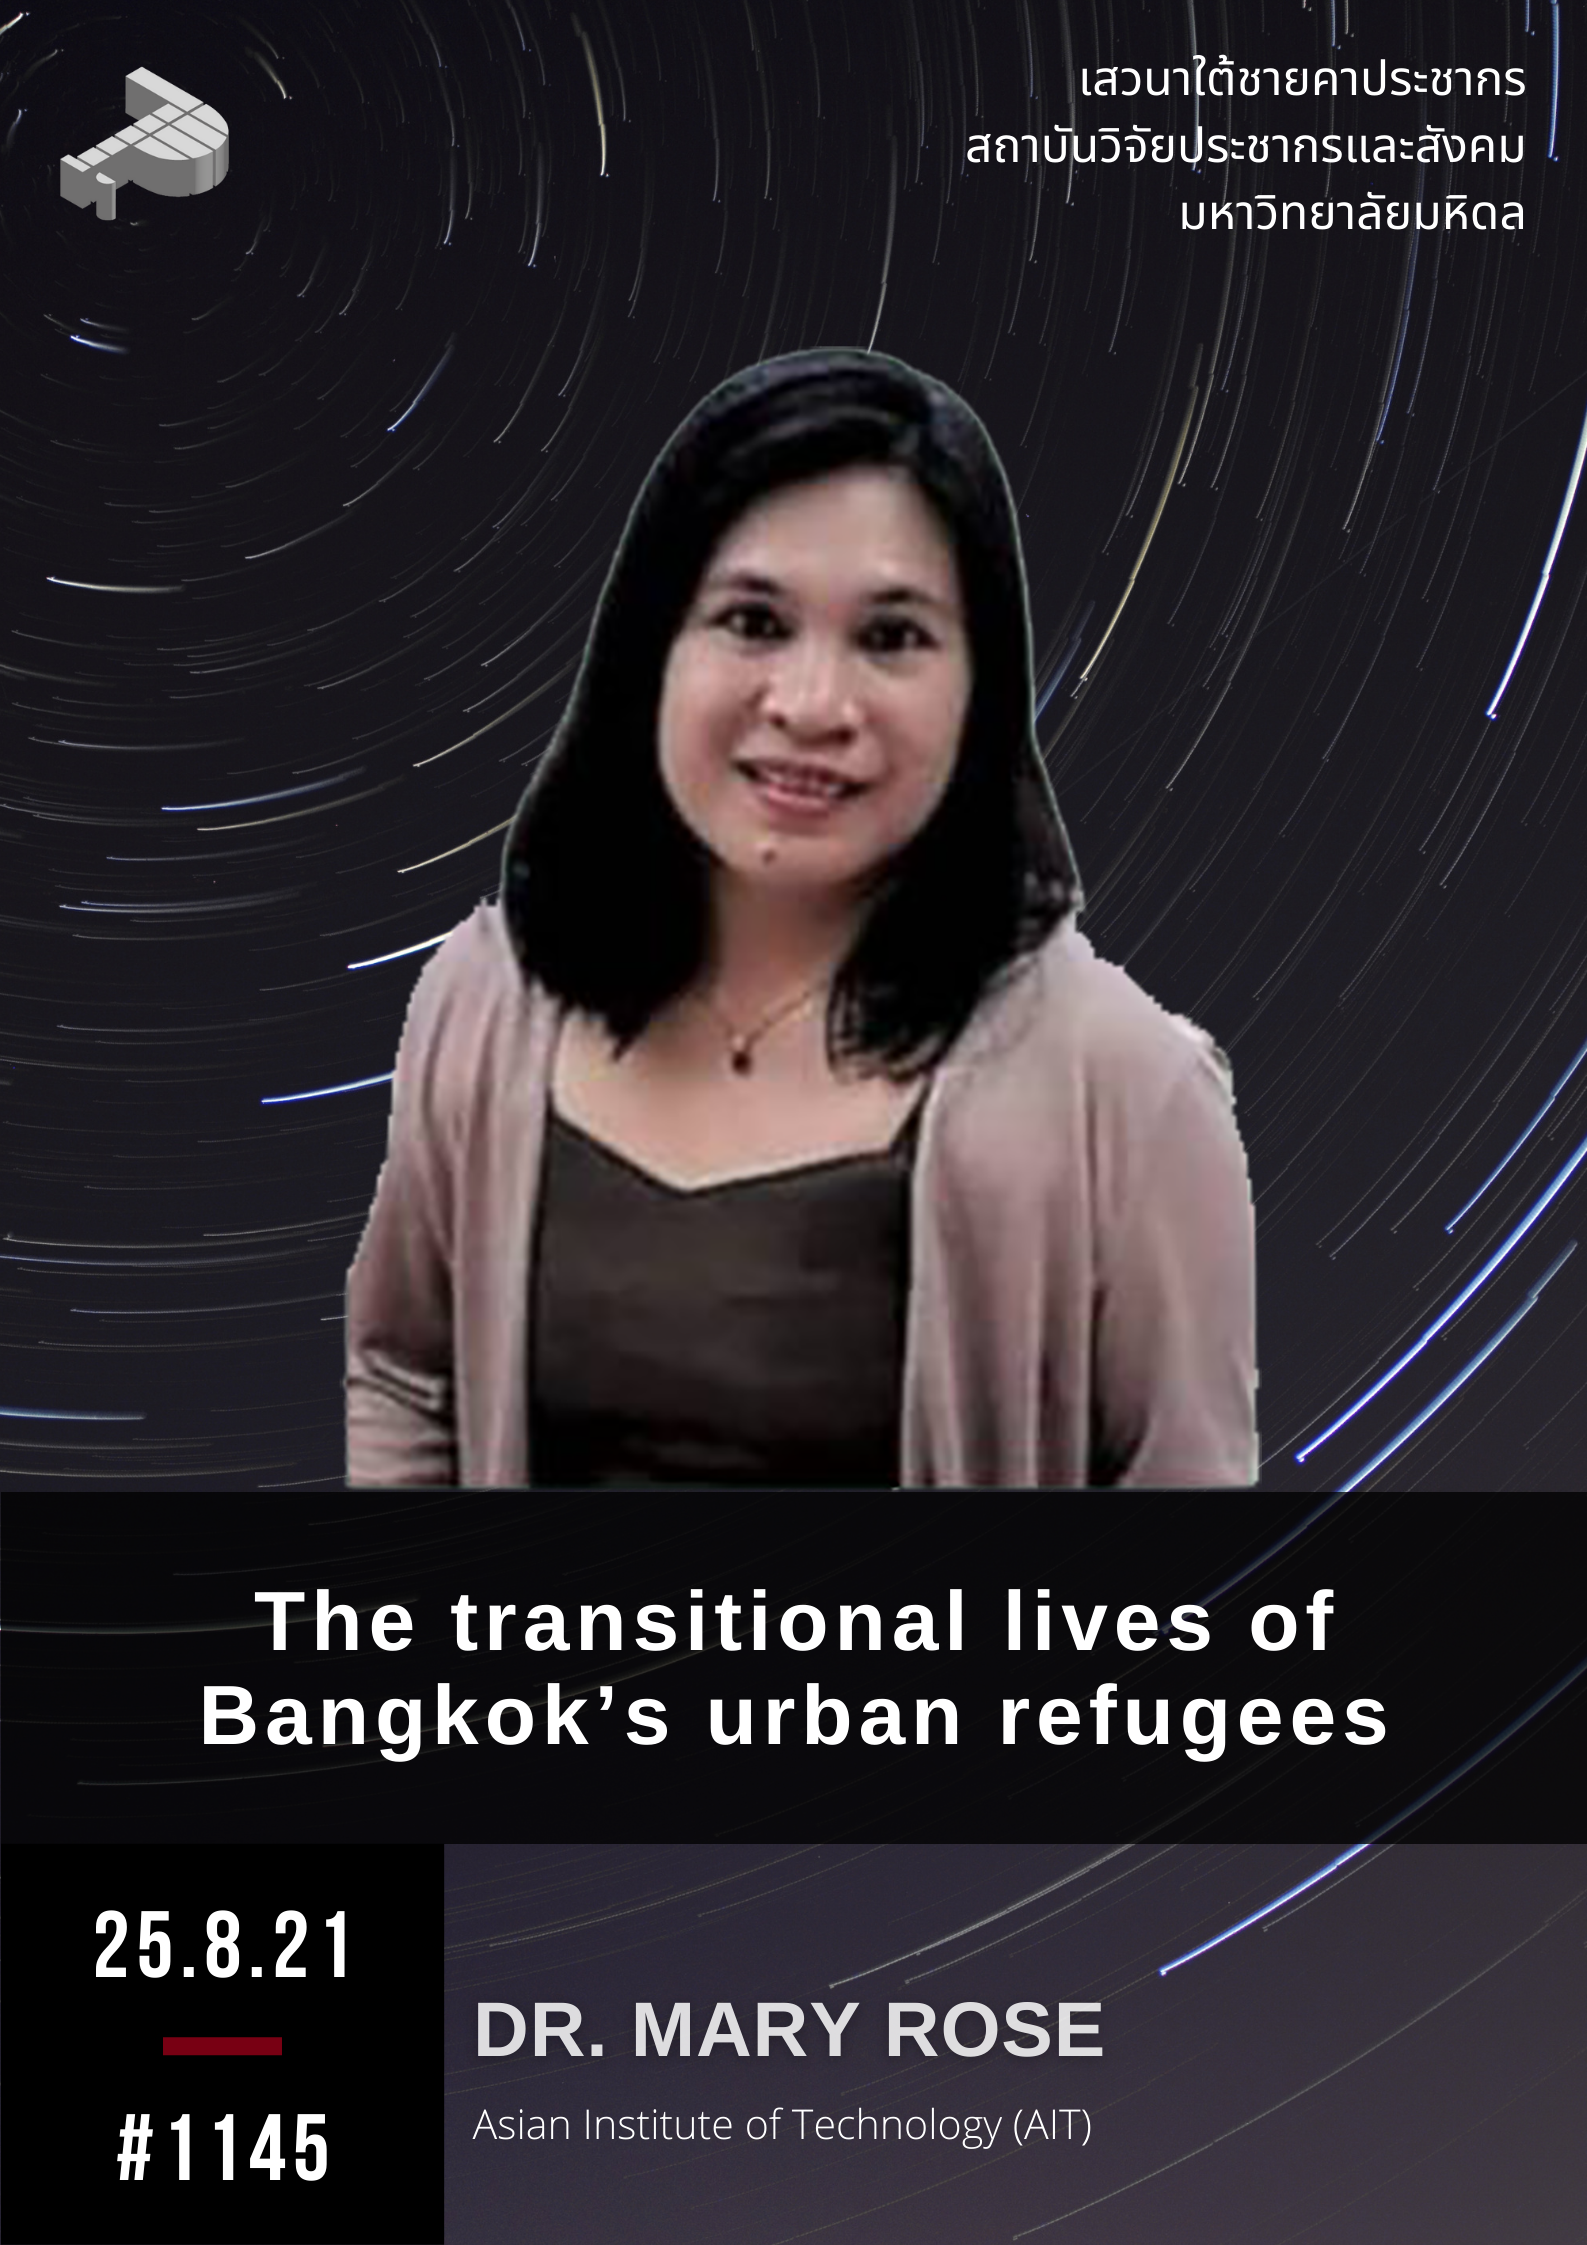 The transitional lives of Bangkok’s urban refugees